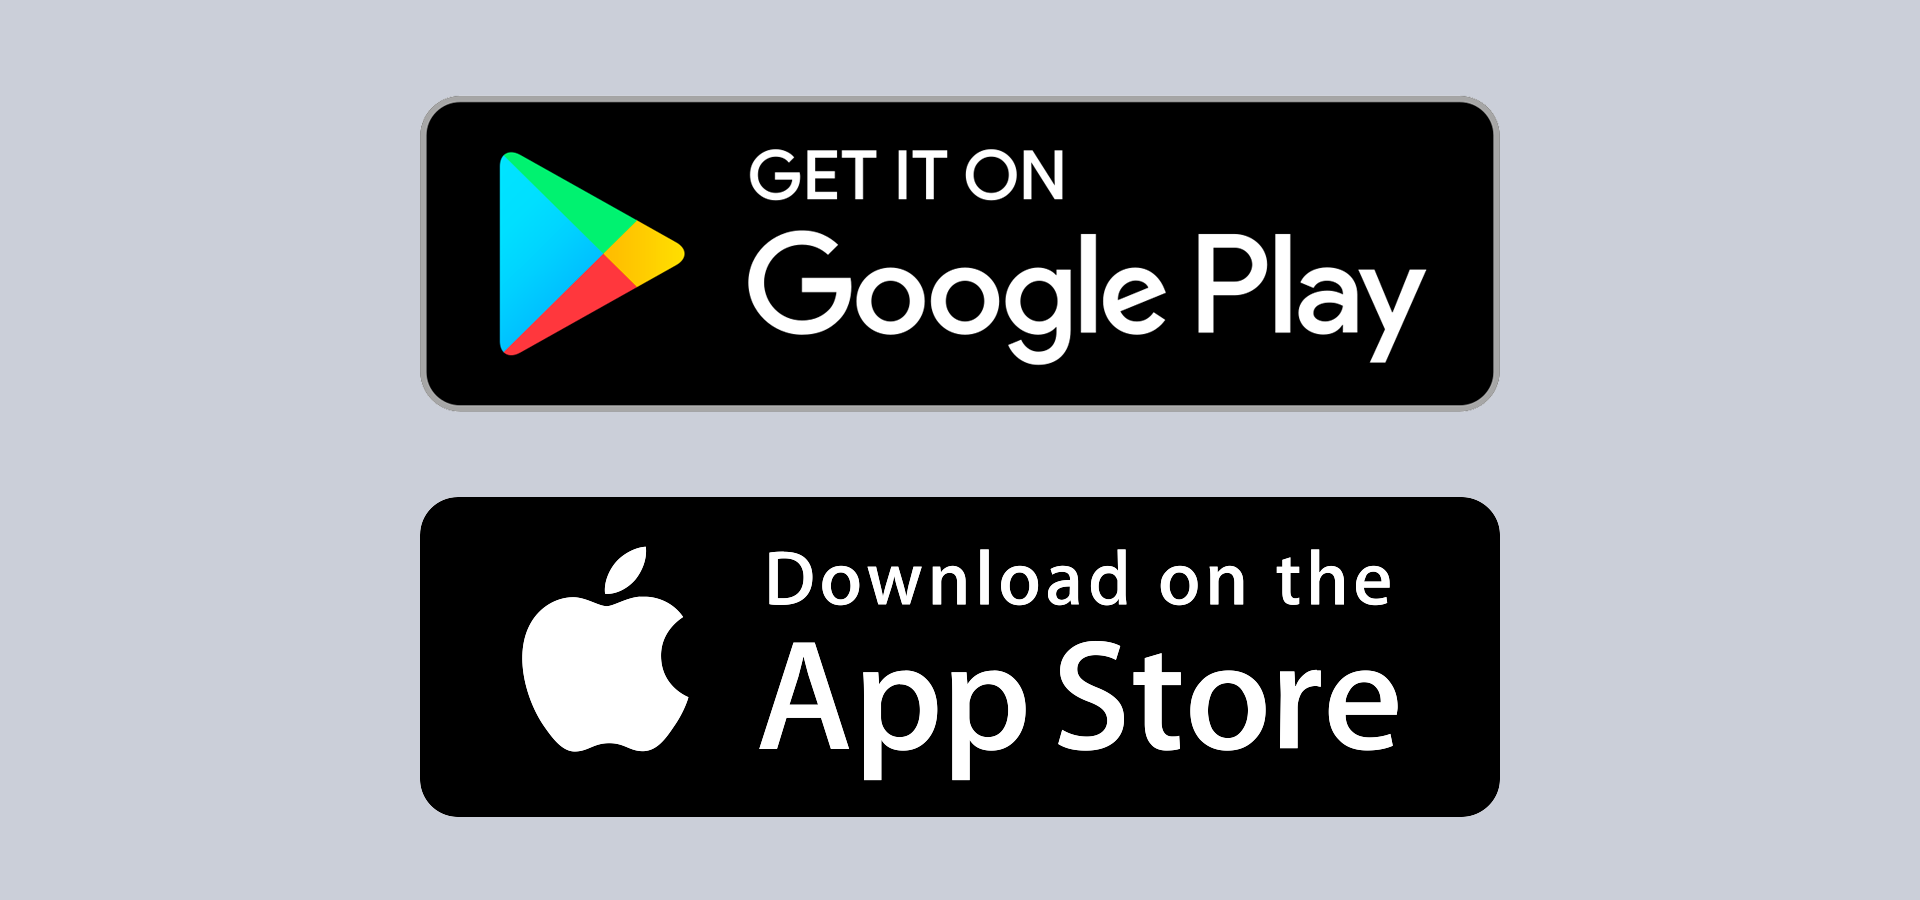 Кнопку google play. App Store Google Play. Значок загрузите в app Store. Доступно в Apple Store. Логотип Google Play.